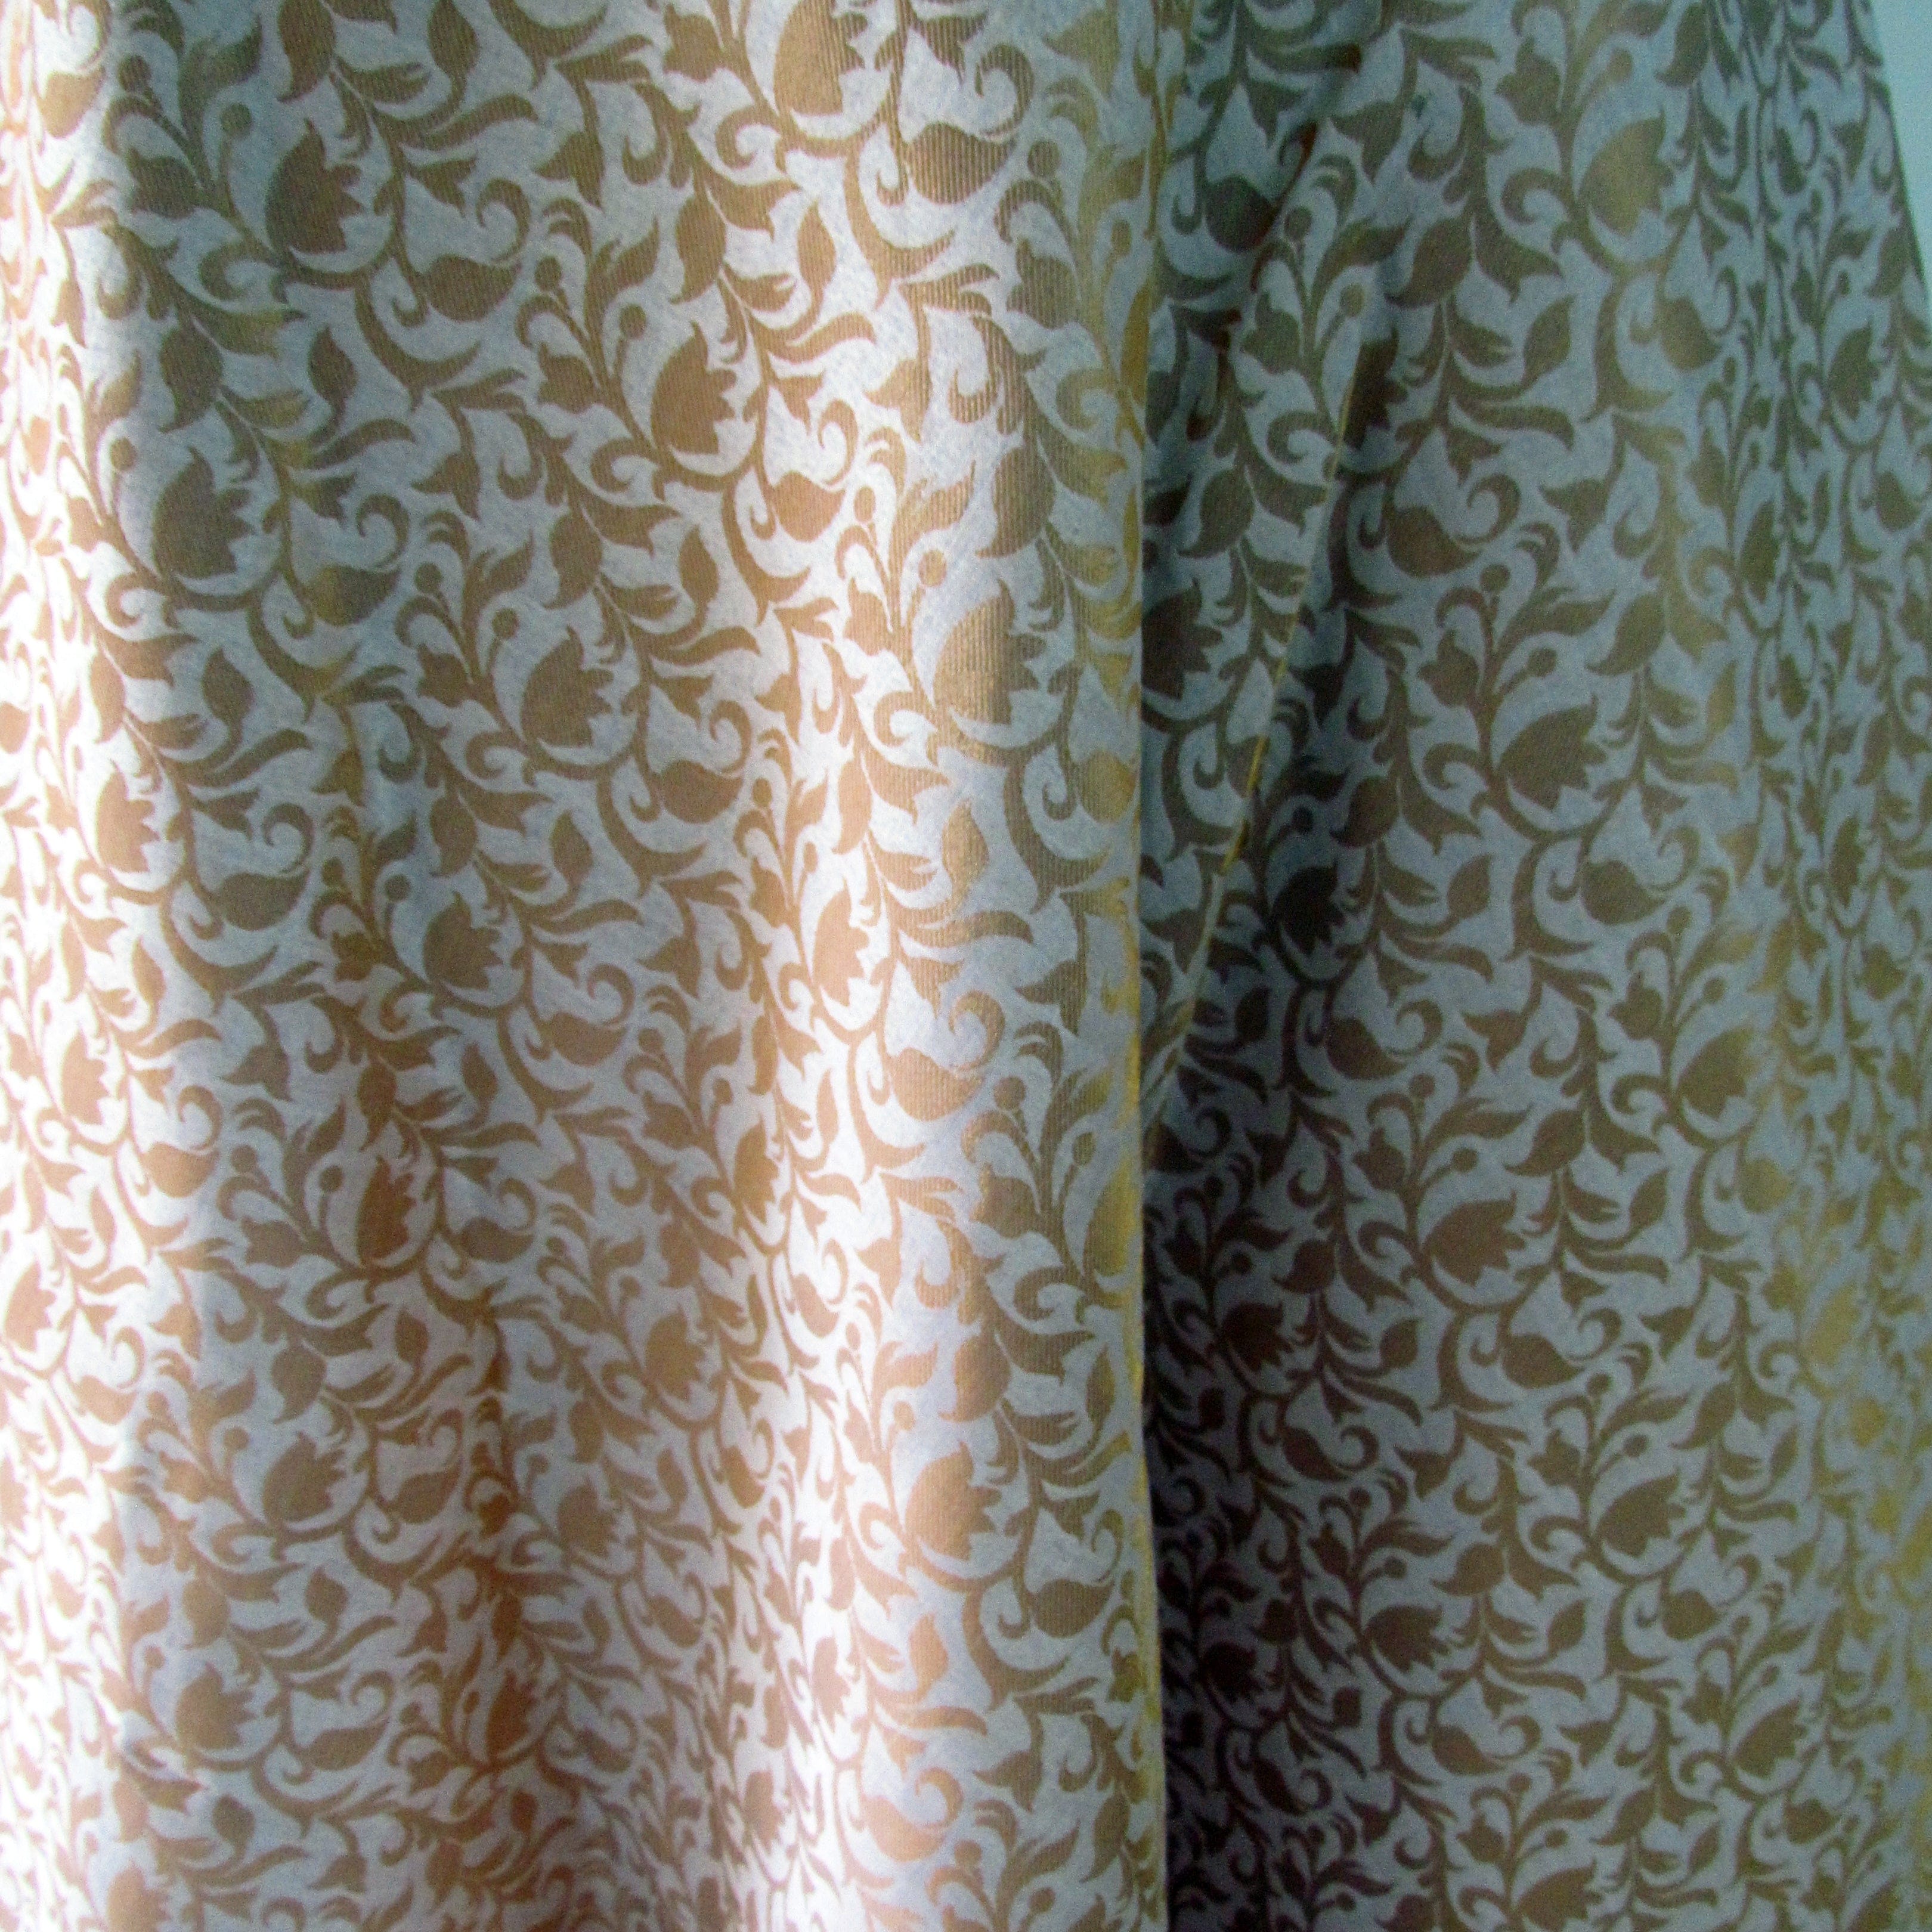 brocade skirt in cream colour